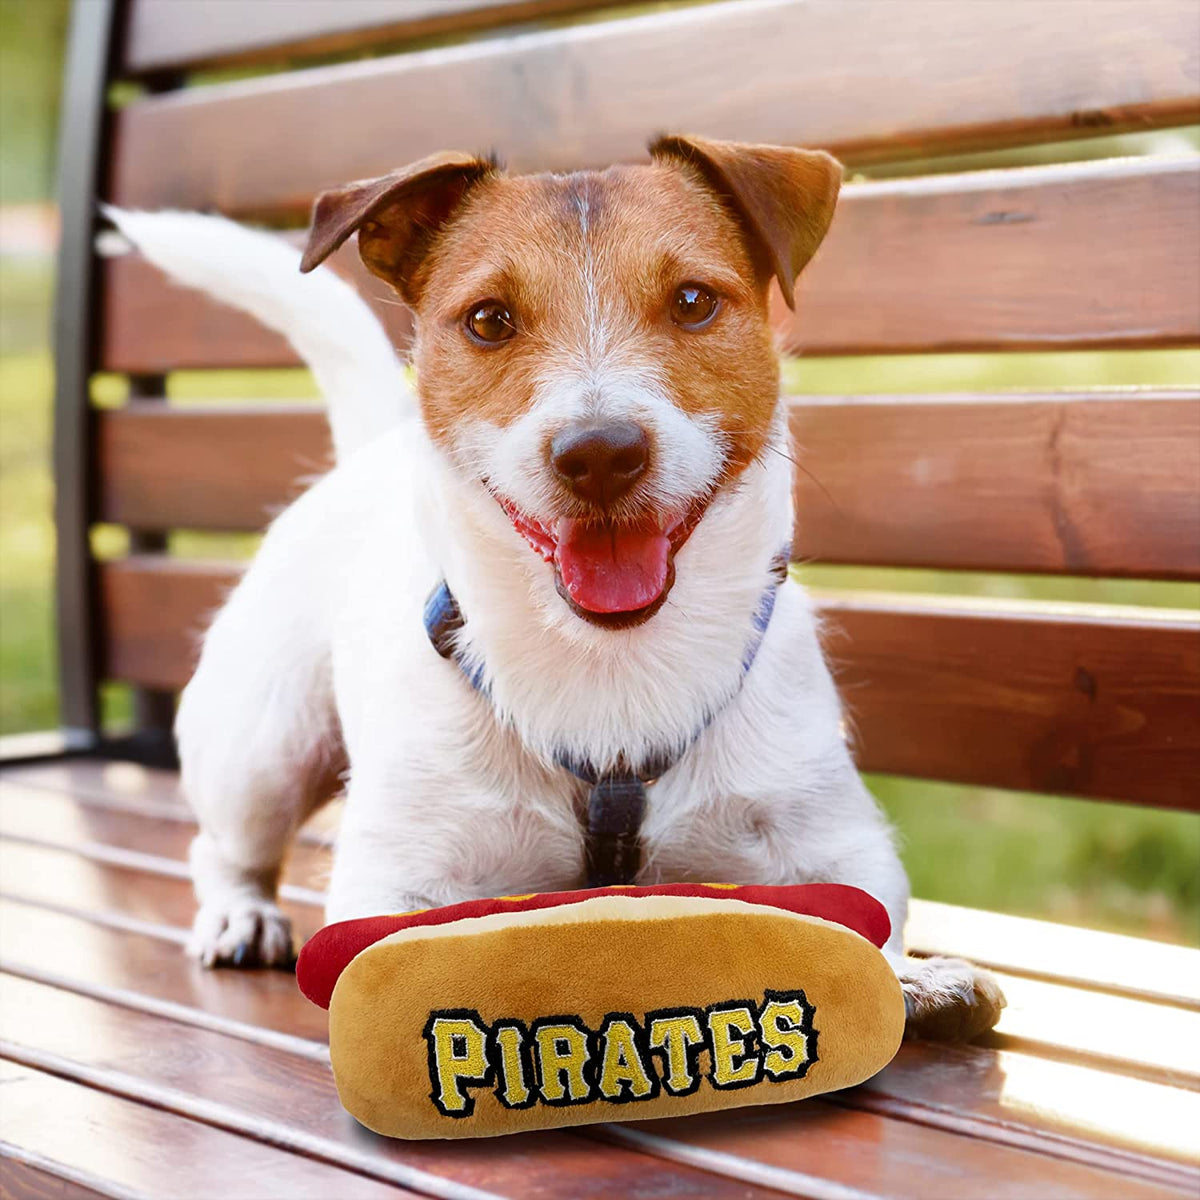 Pittsburgh Pirates Dog Collar